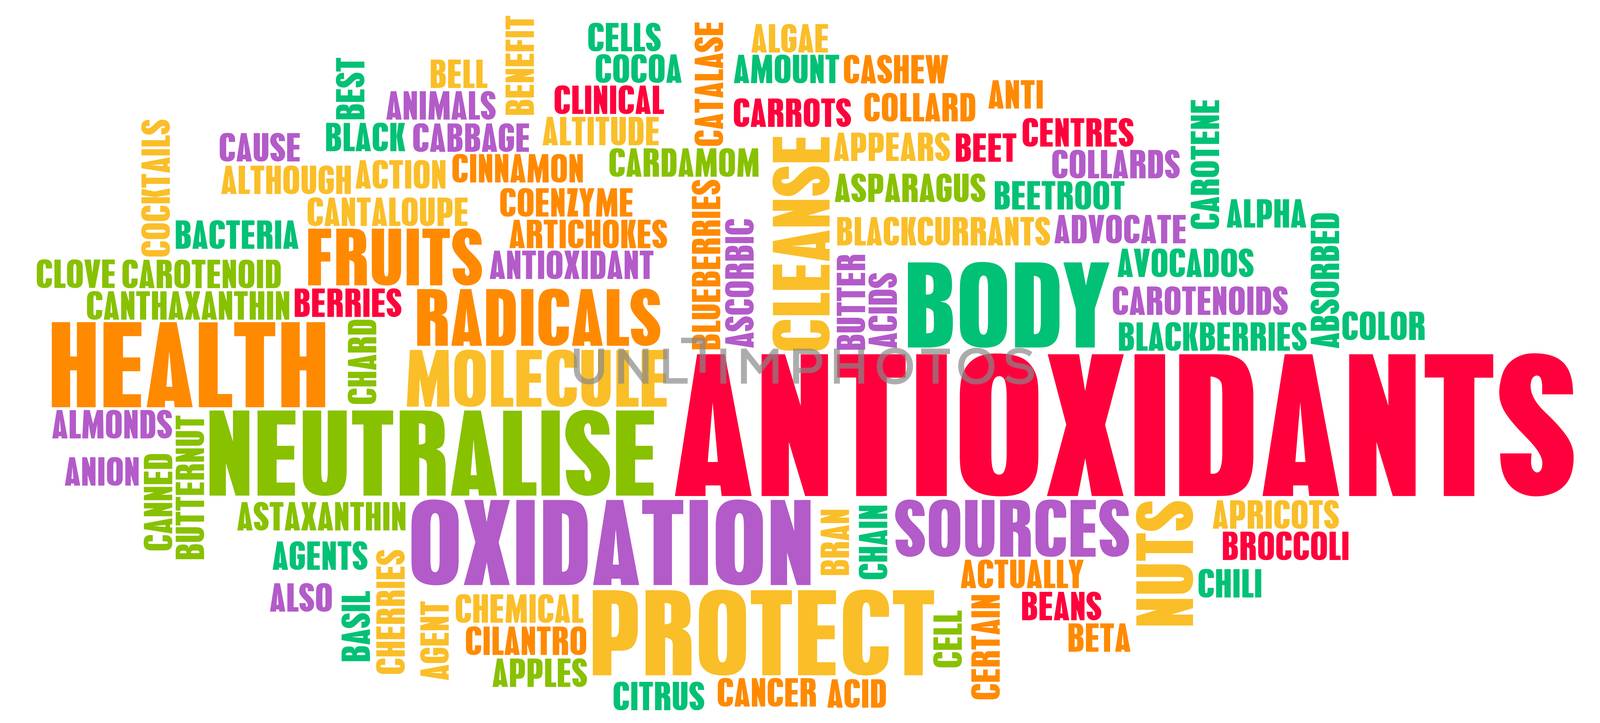 Antioxidants by kentoh